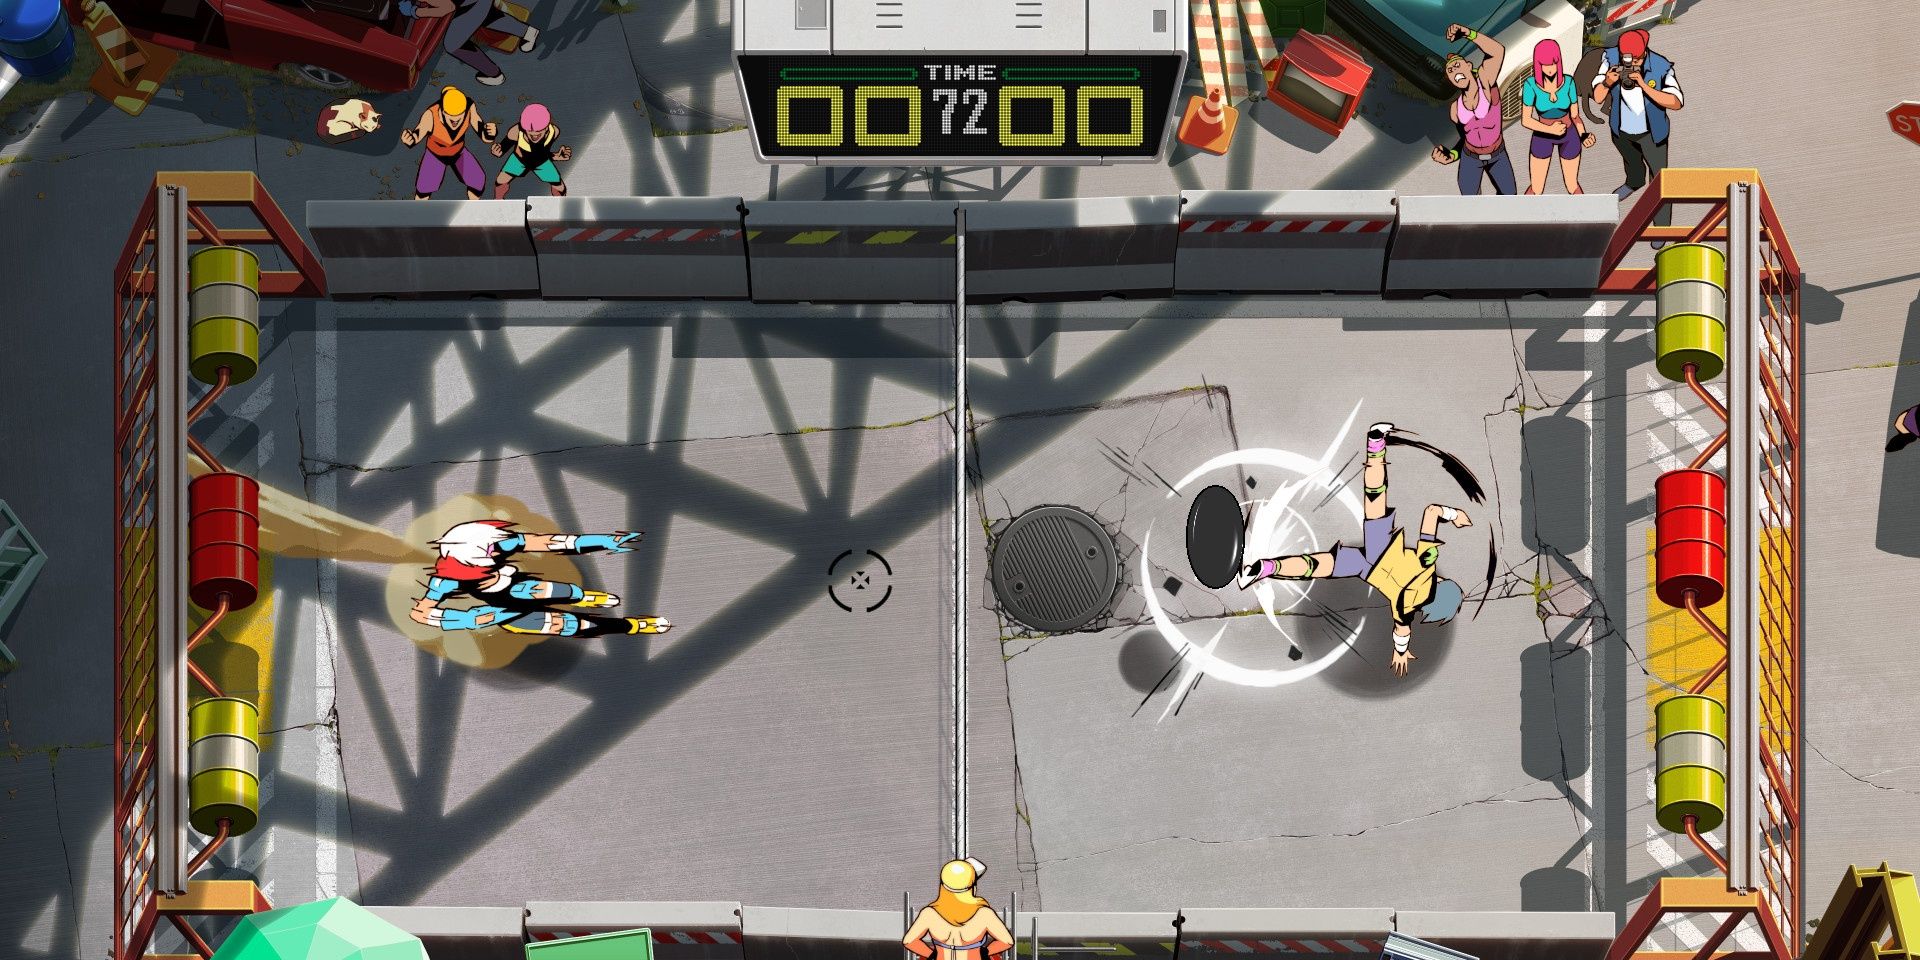 A screenshot showing gameplay in Windjammers 2